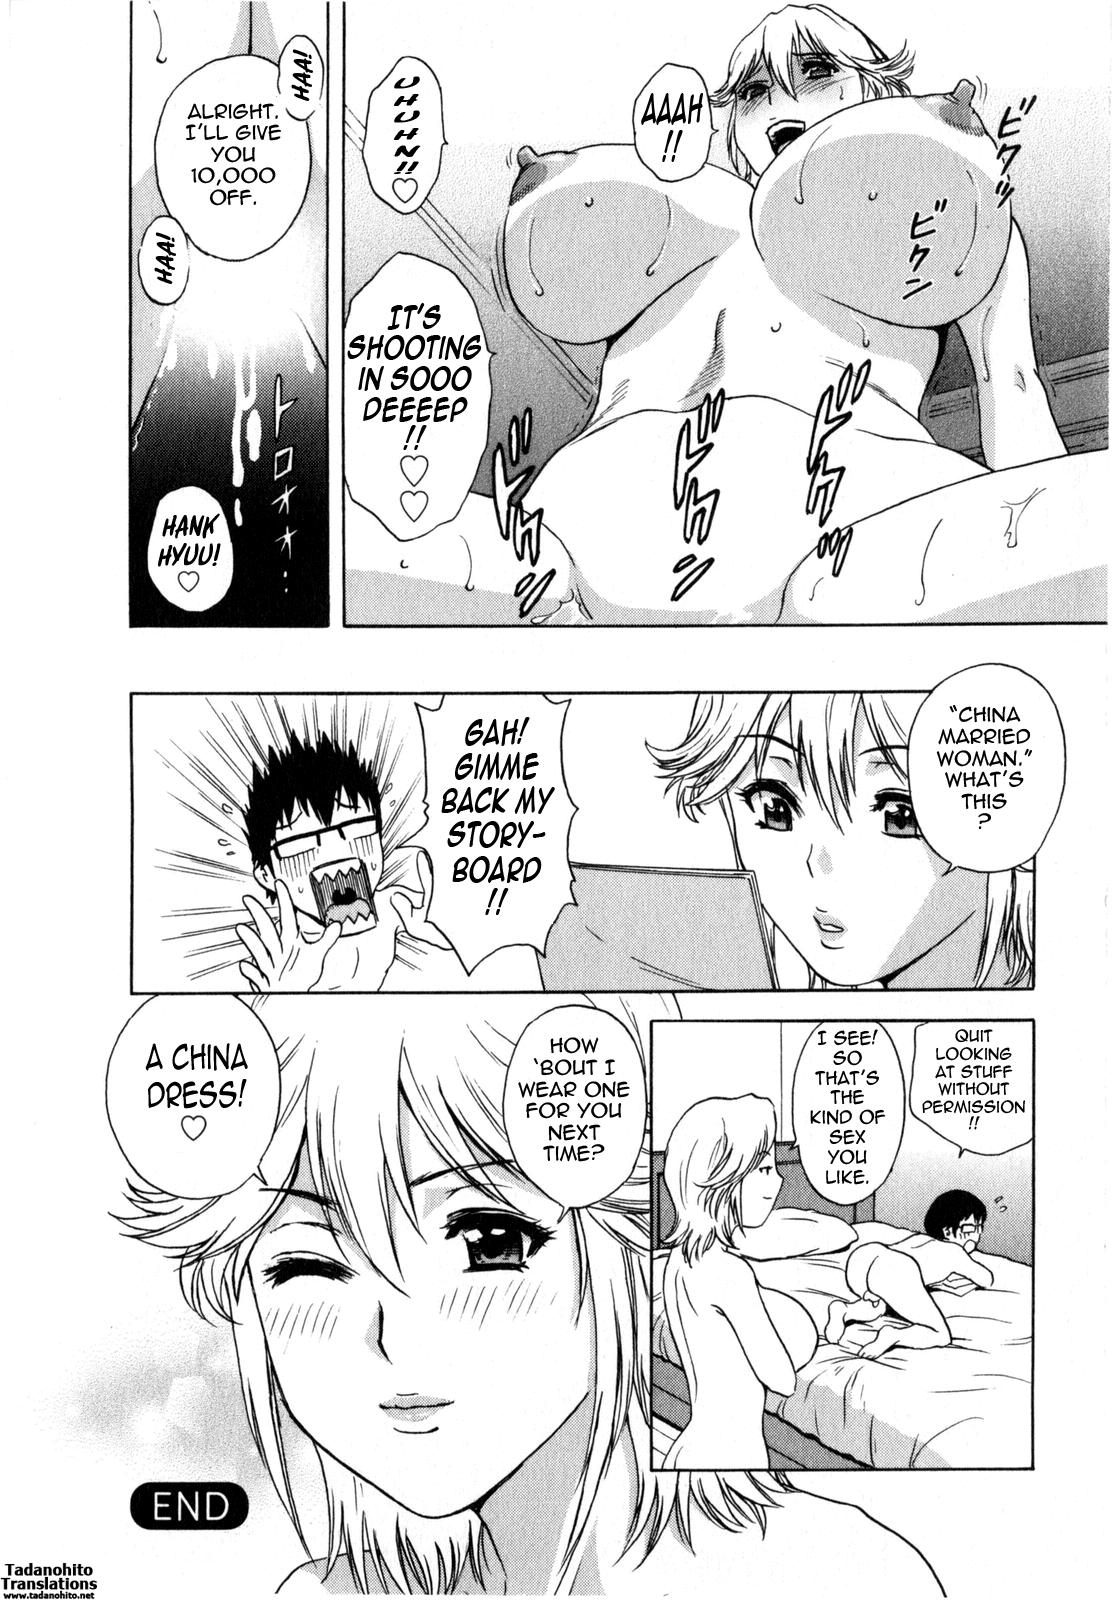 [Hidemaru] Life with Married Women Just Like a Manga 2 - Ch. 1-8 [English] {Tadanohito} 63